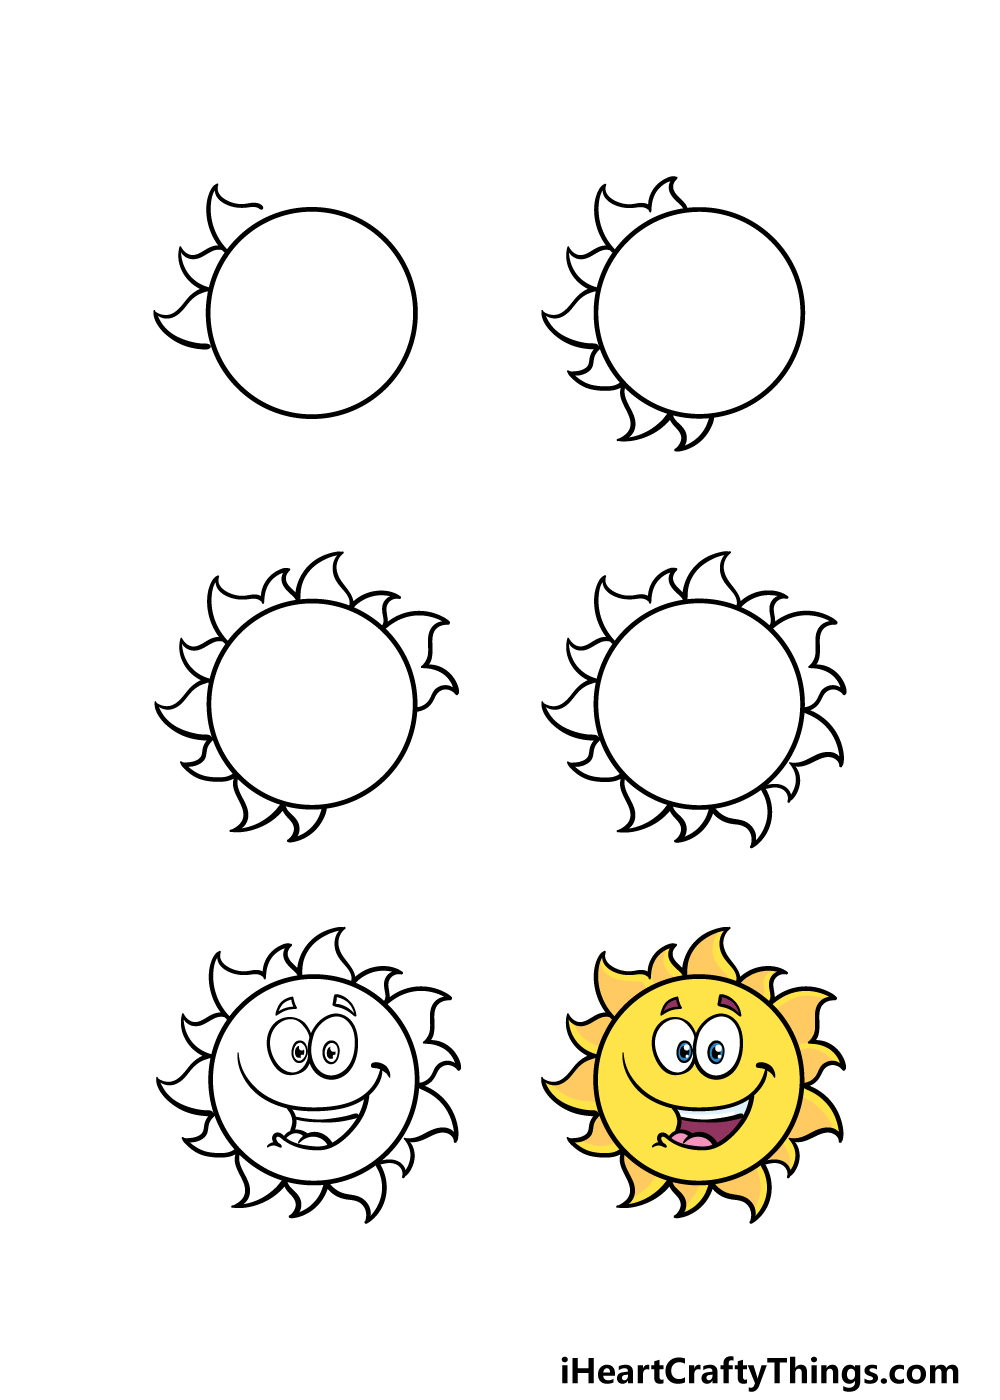 Cartoon Sun Drawing - How To Draw A Cartoon Sun Step By Step